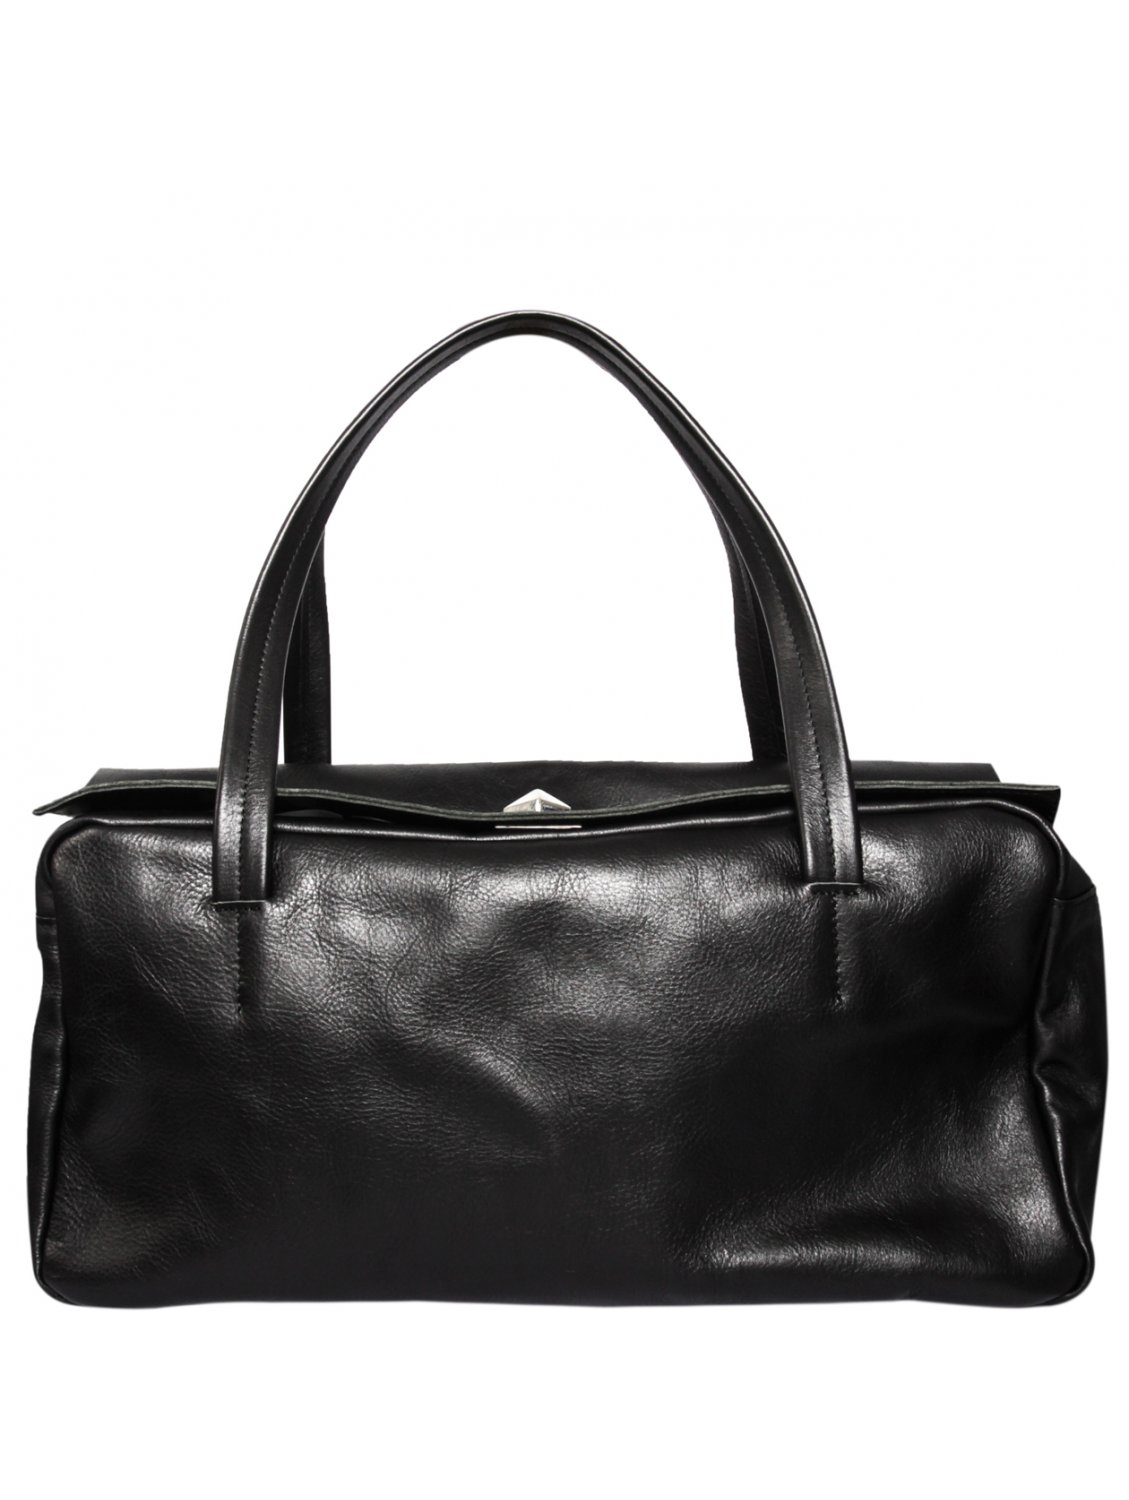 Yohji yamamoto Rectangular Leather Handbag Black in Black